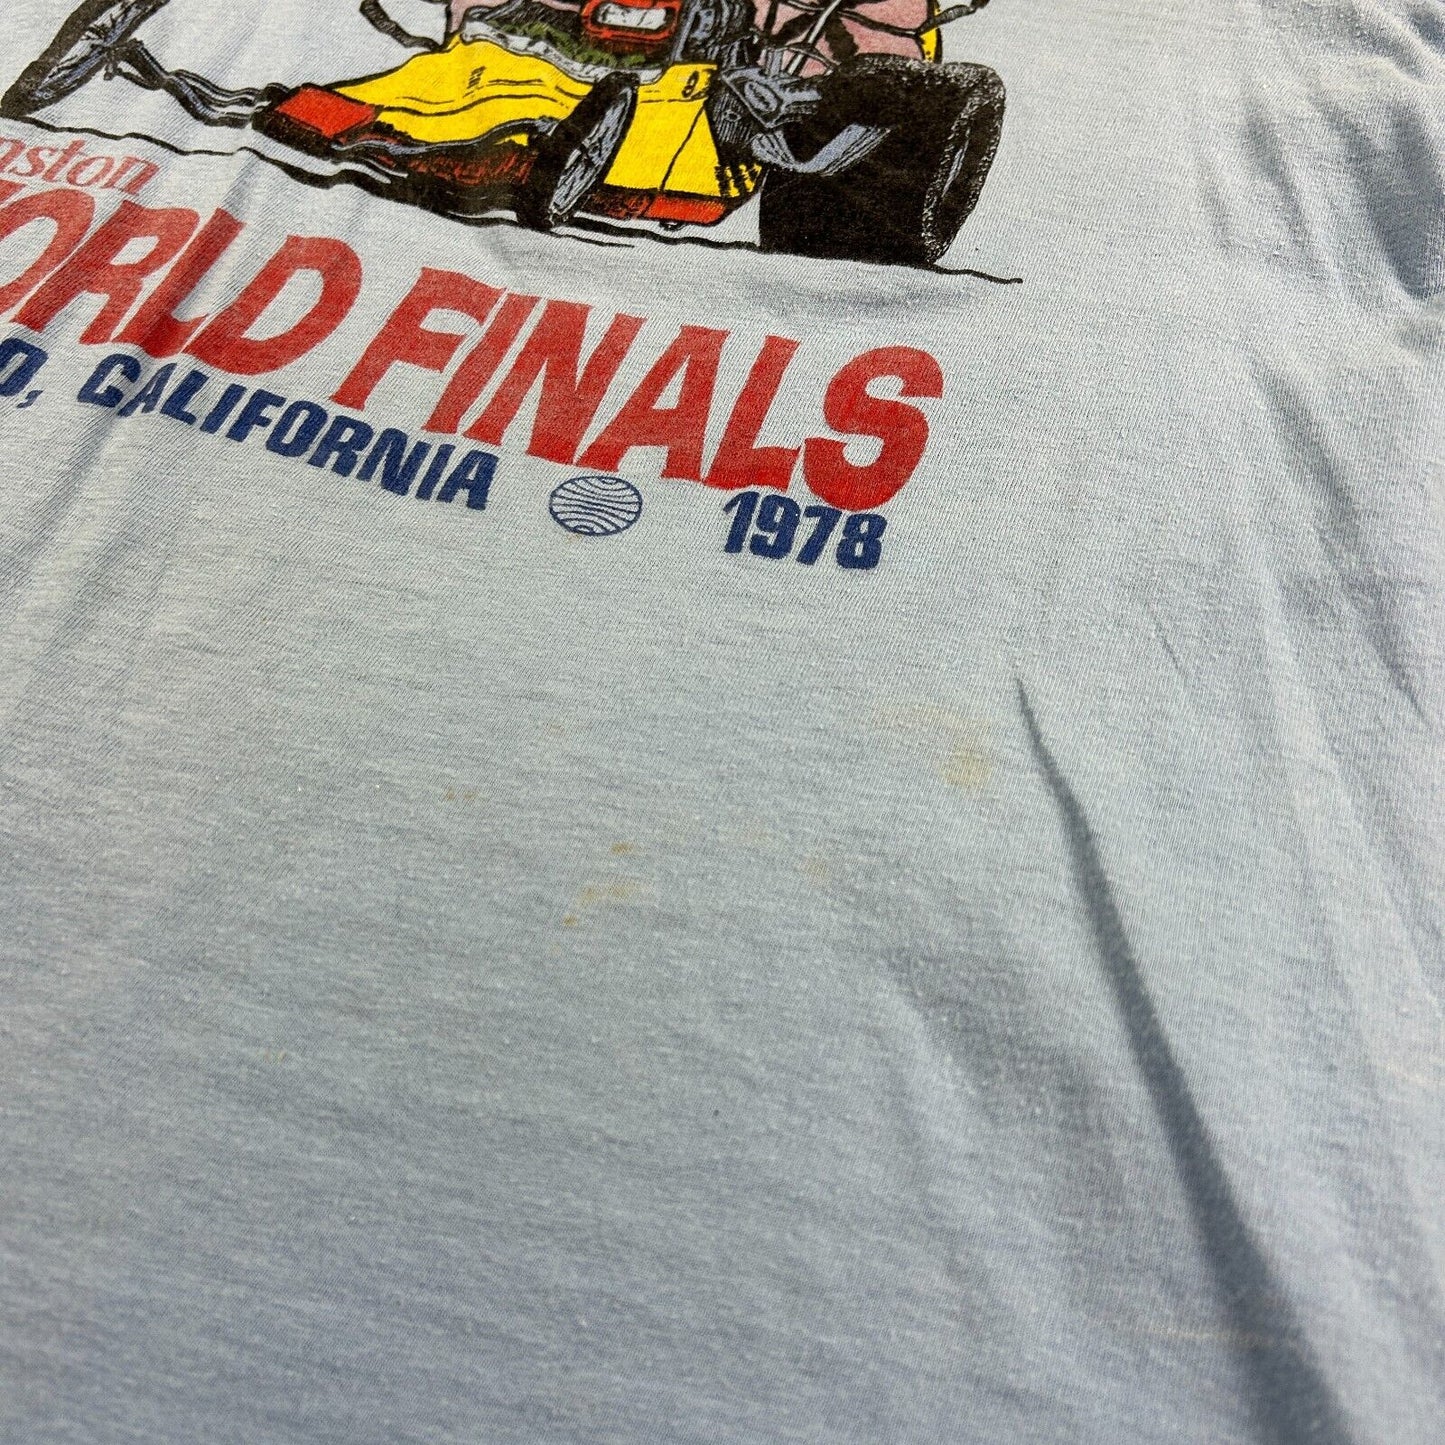 VINTAGE 1978 | WINSTON World Finals Hot Rod Racing T-Shirt sz Small Adult